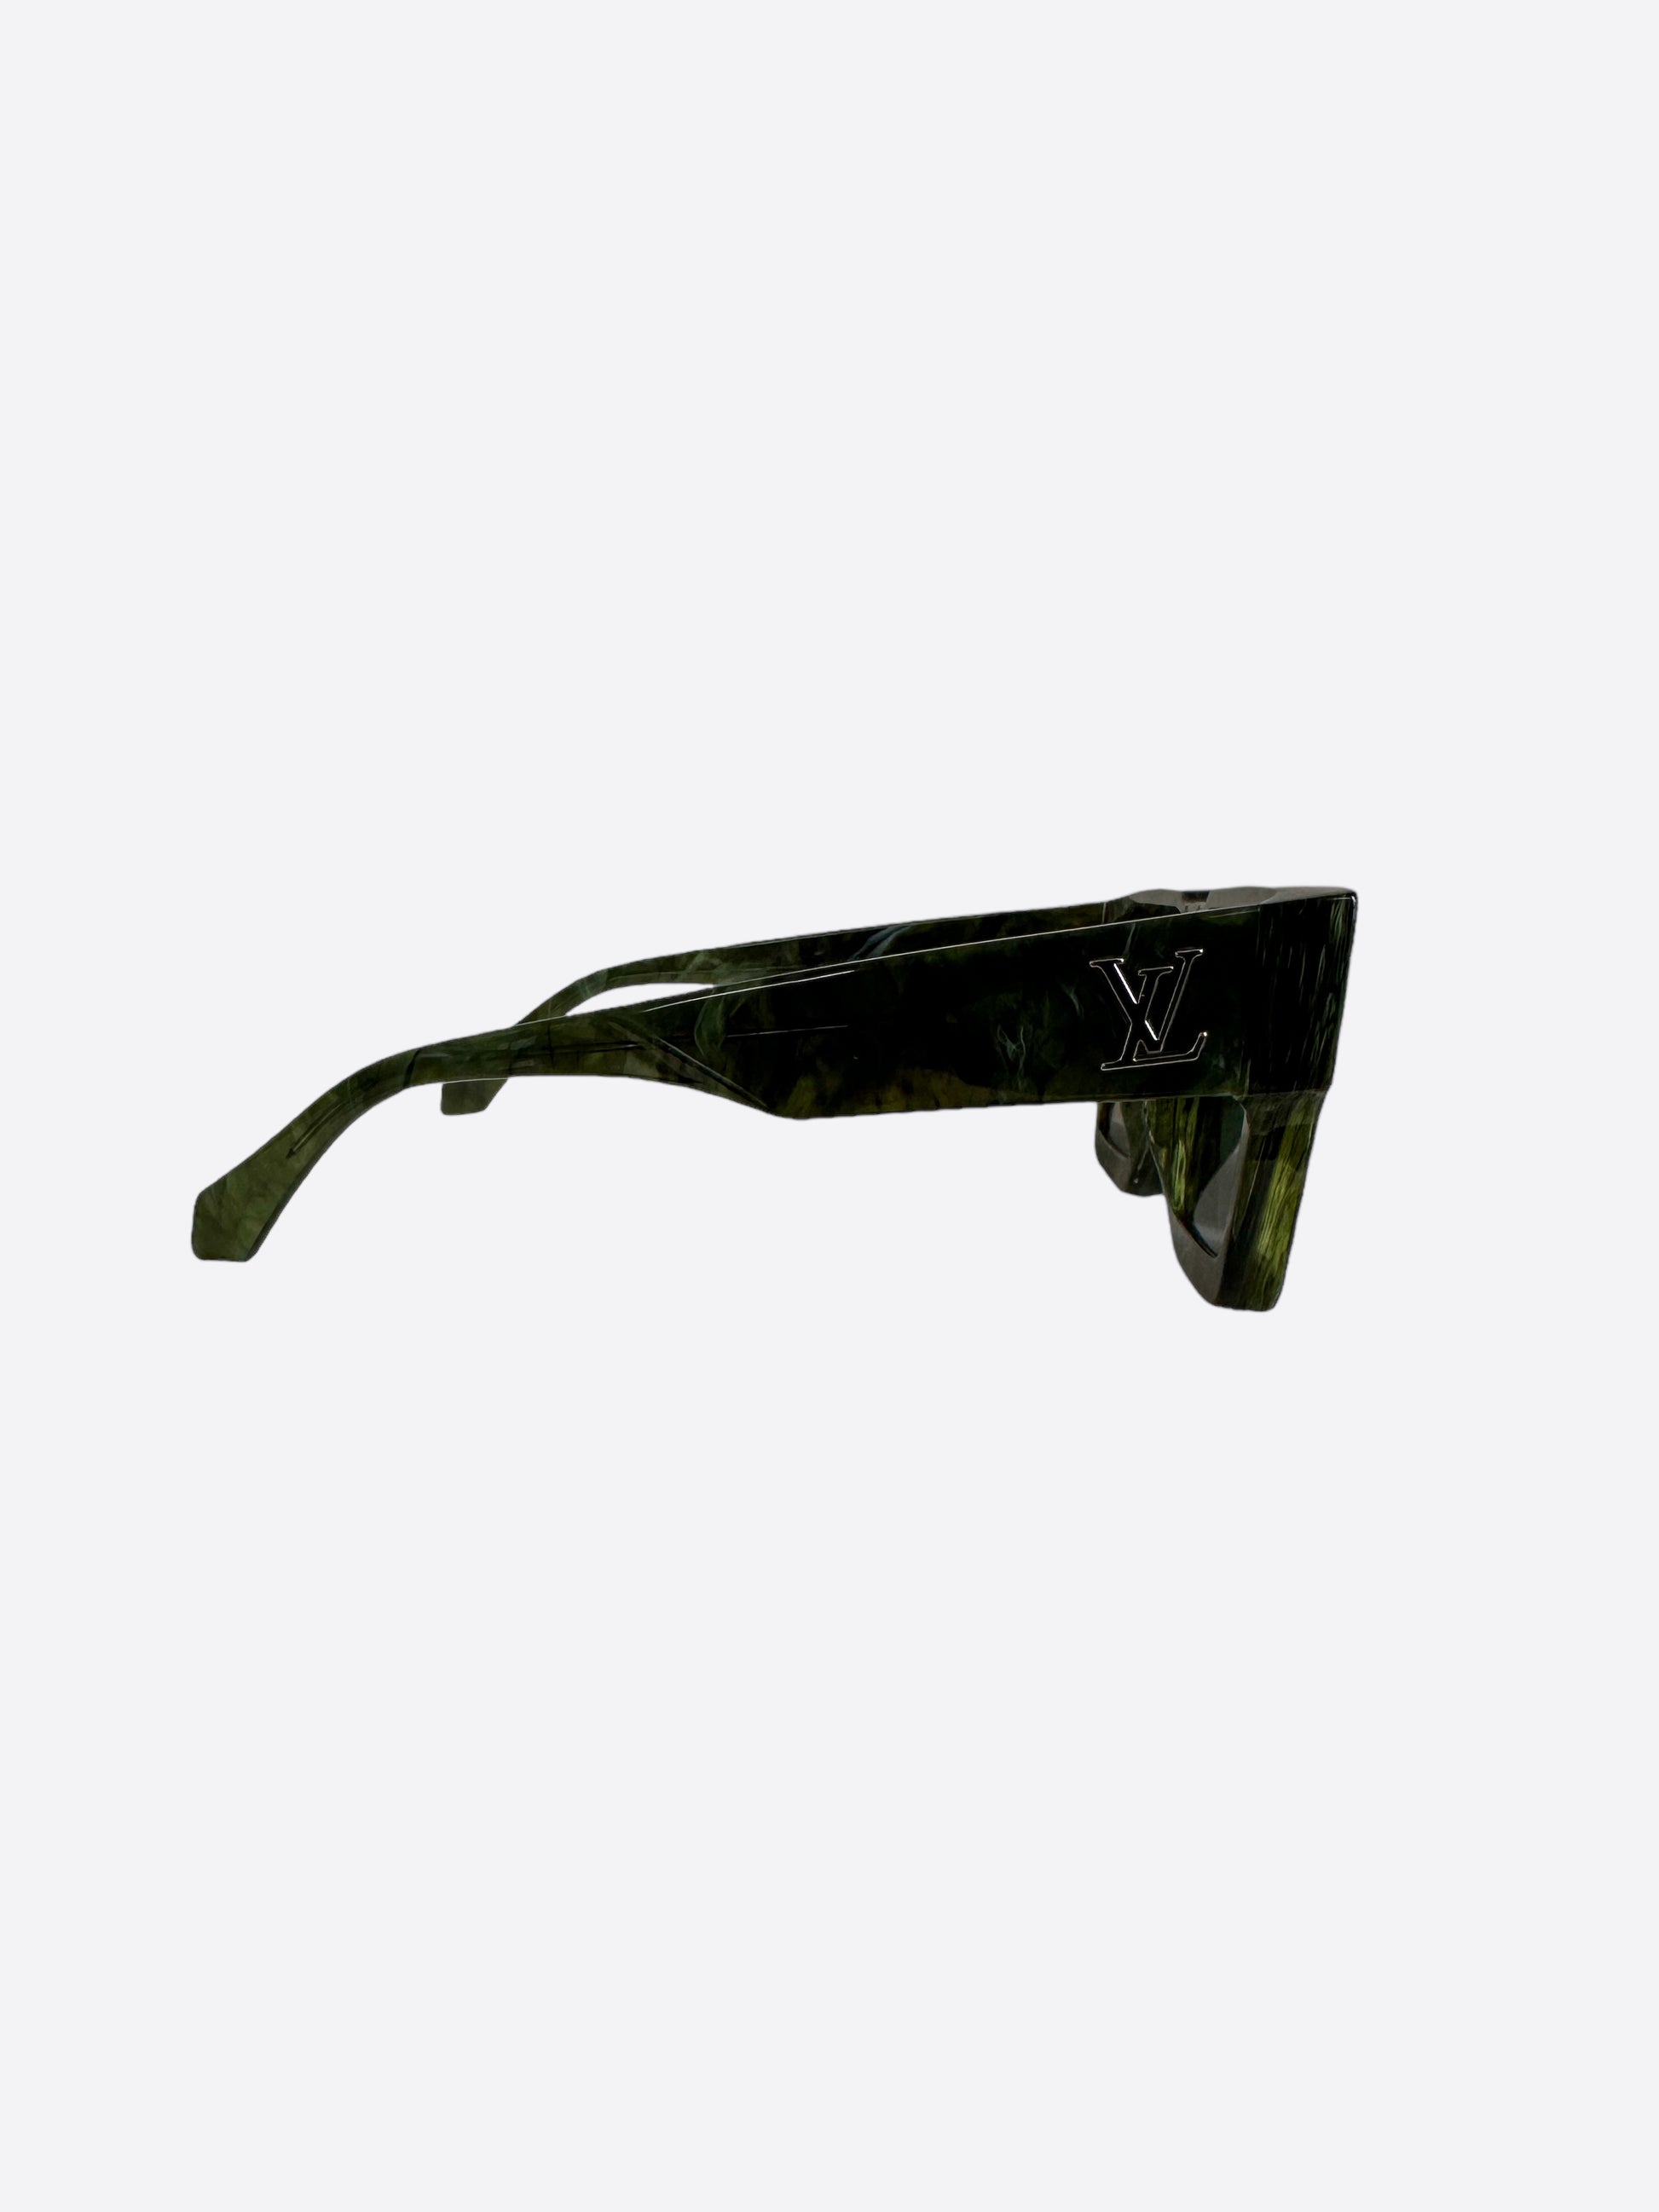 Louis vuitton cyclone sunglasses( navy blue )